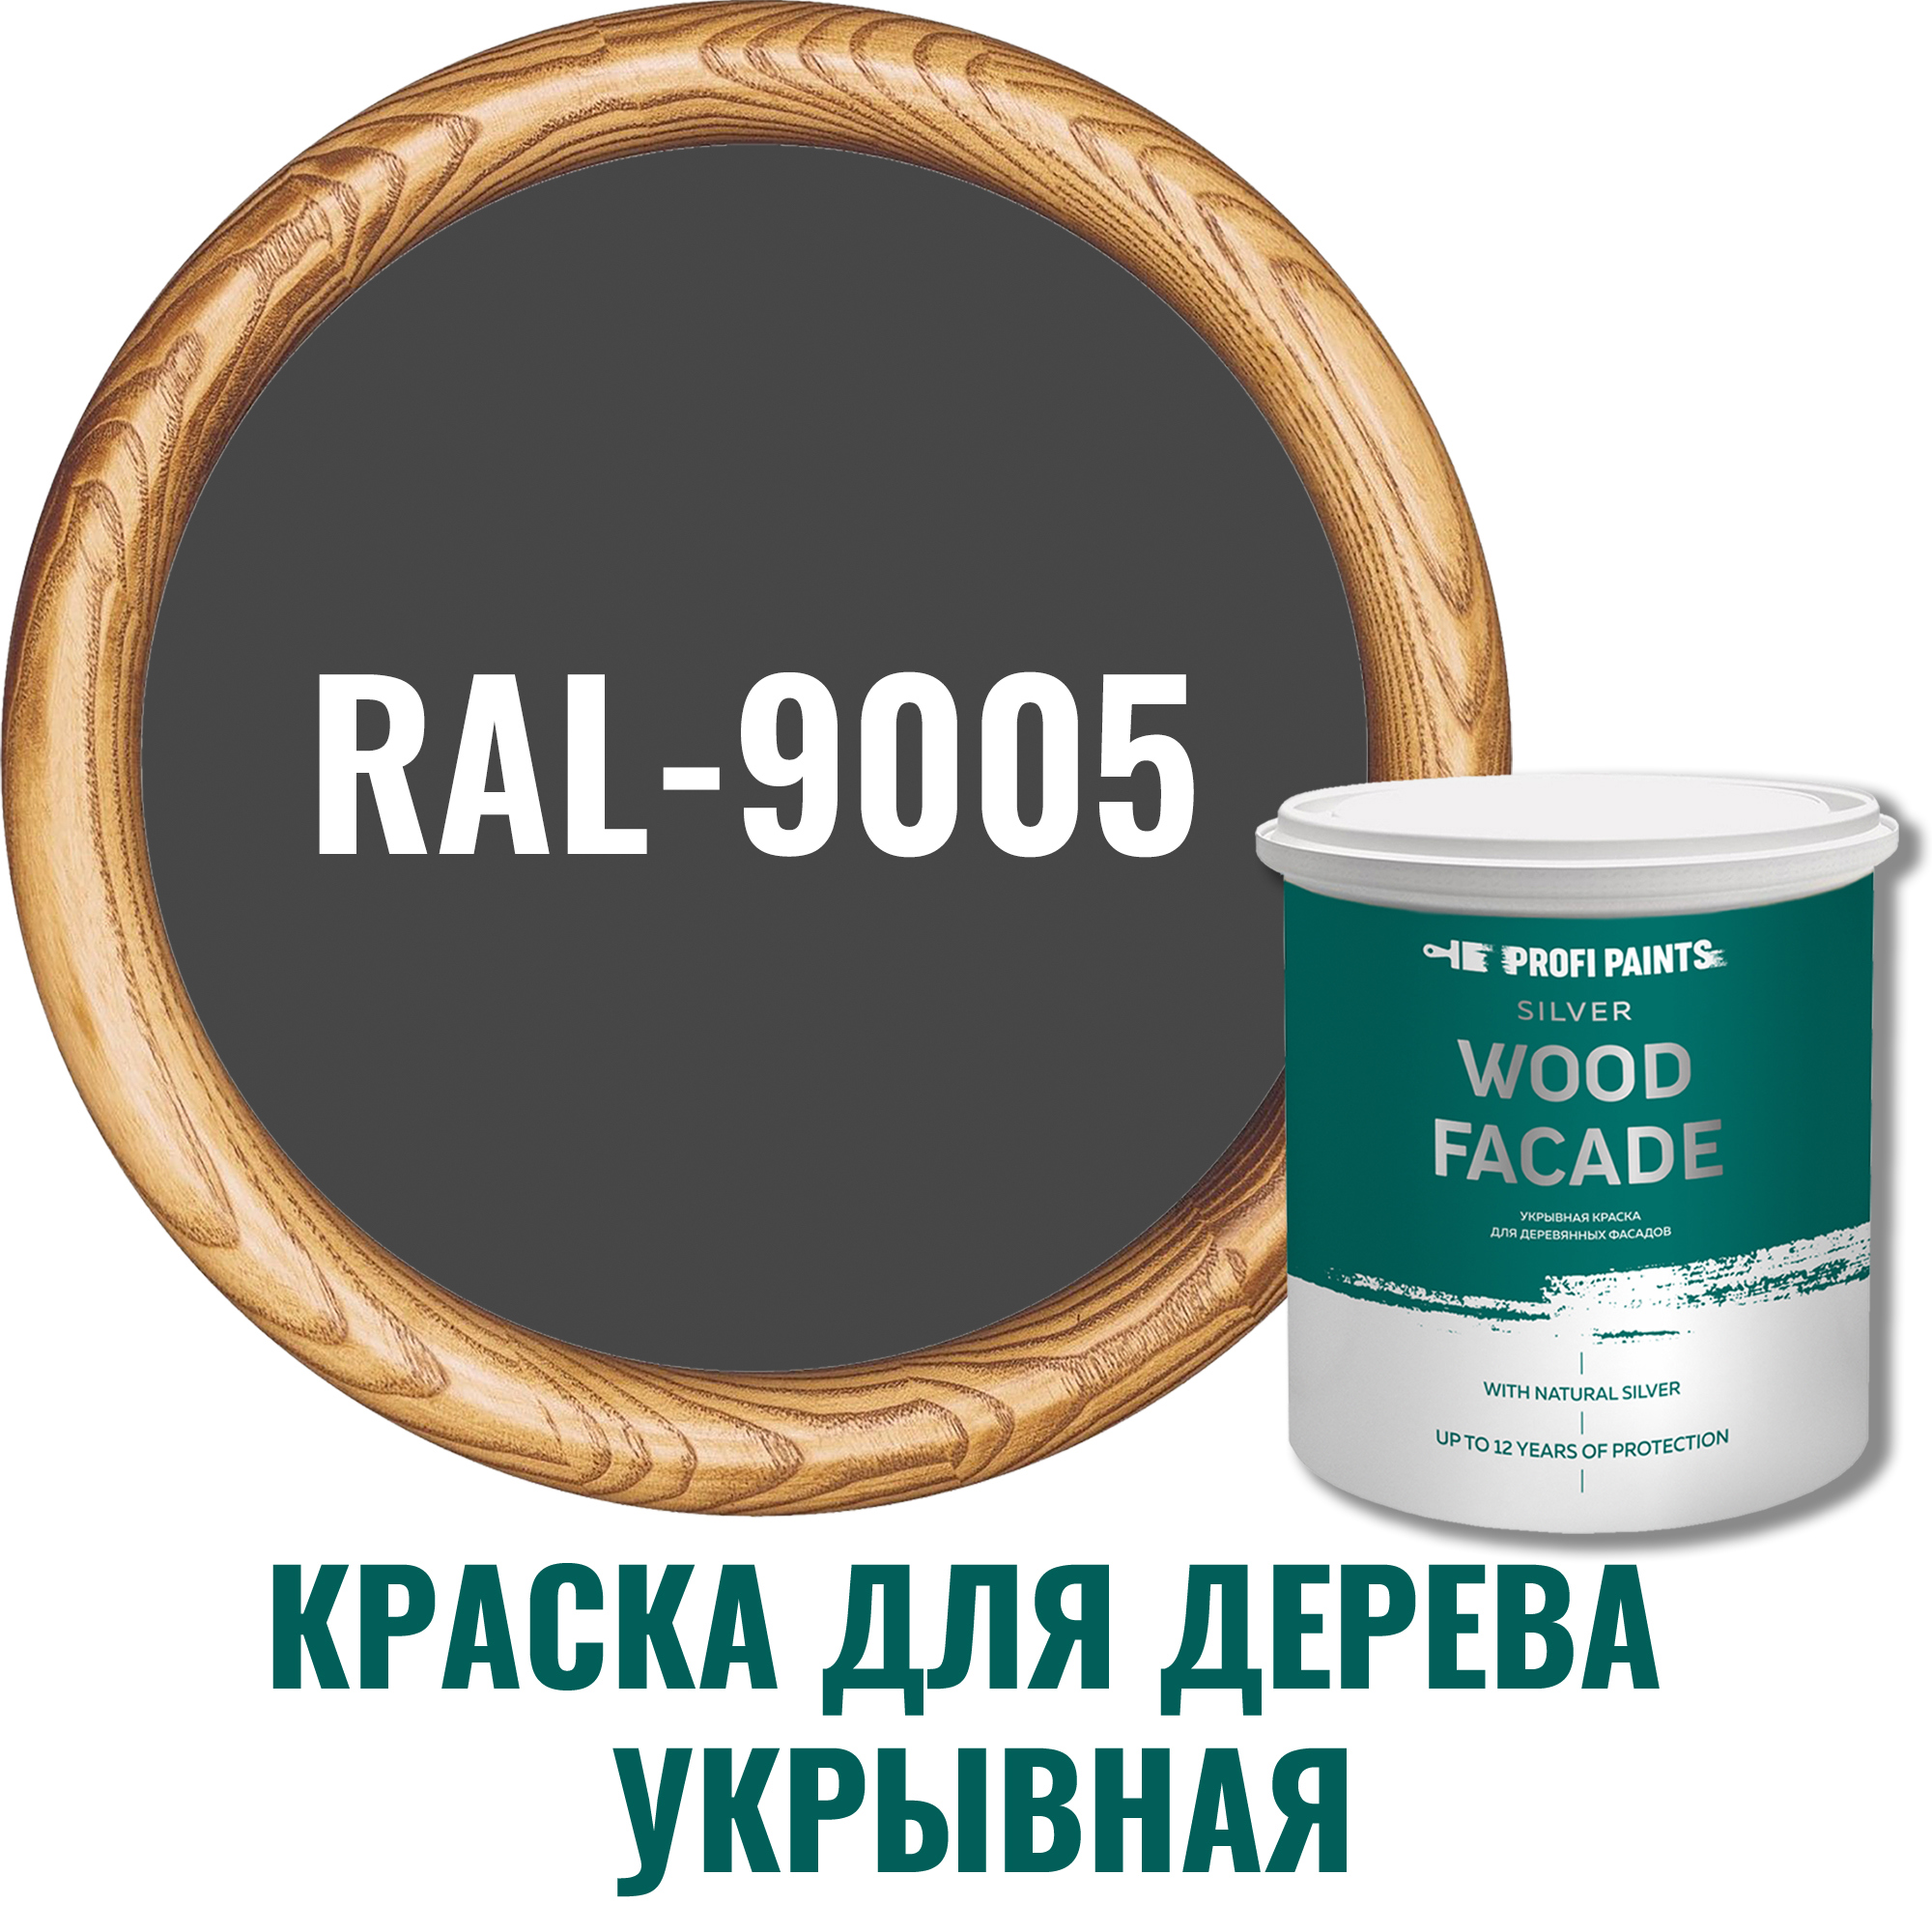 91106566 Краска для дерева 11206_D SILVER WOOD FASADE цвет RAL-9005 черный 0.9 л STLM-0487564 PROFIPAINTS